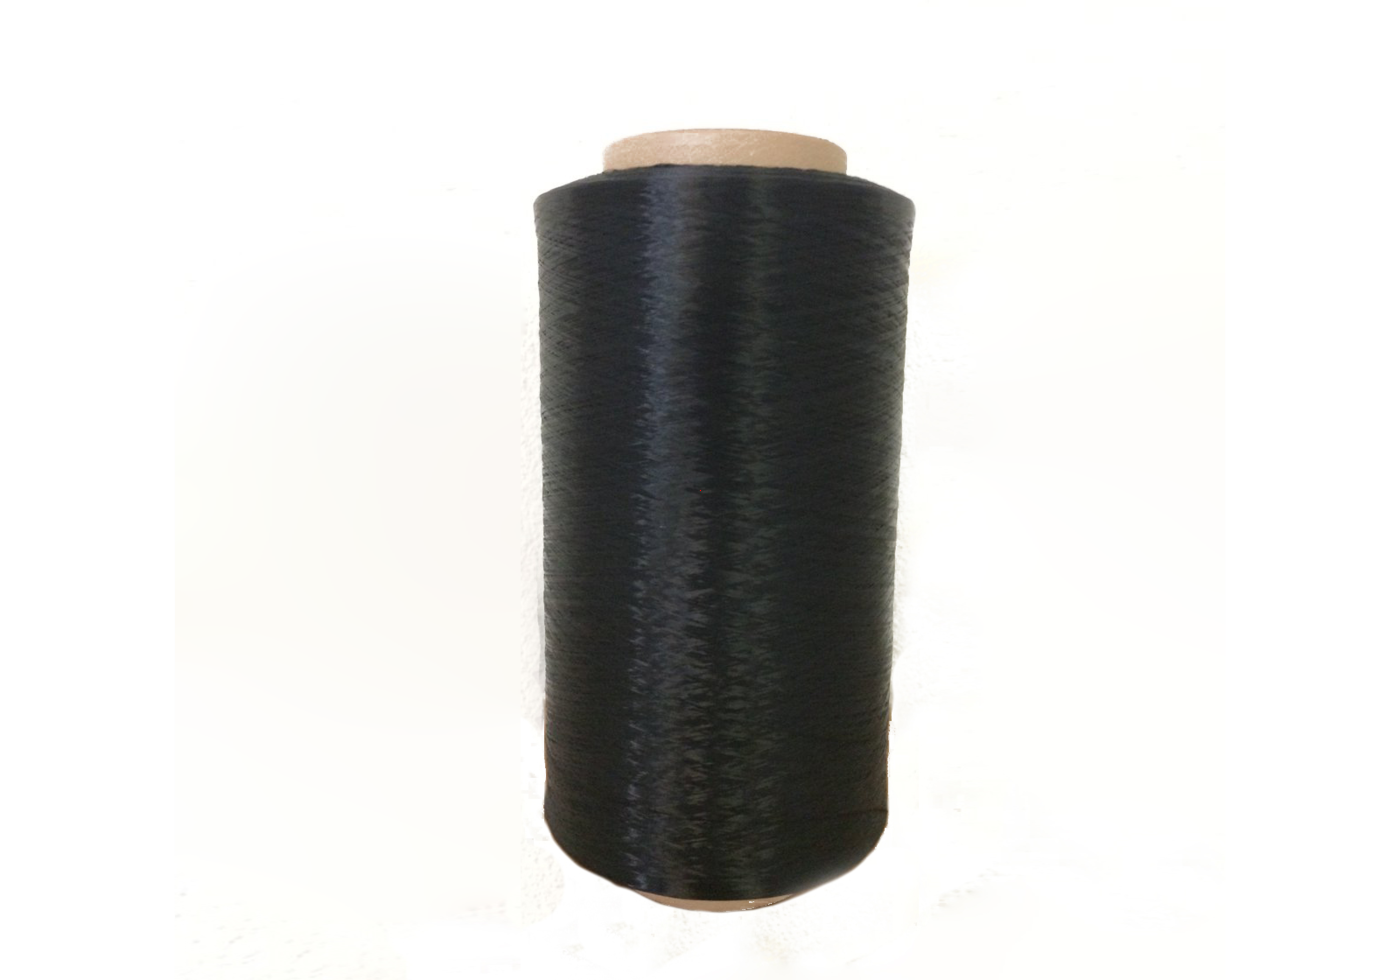 HDPE multifilament yarn in black